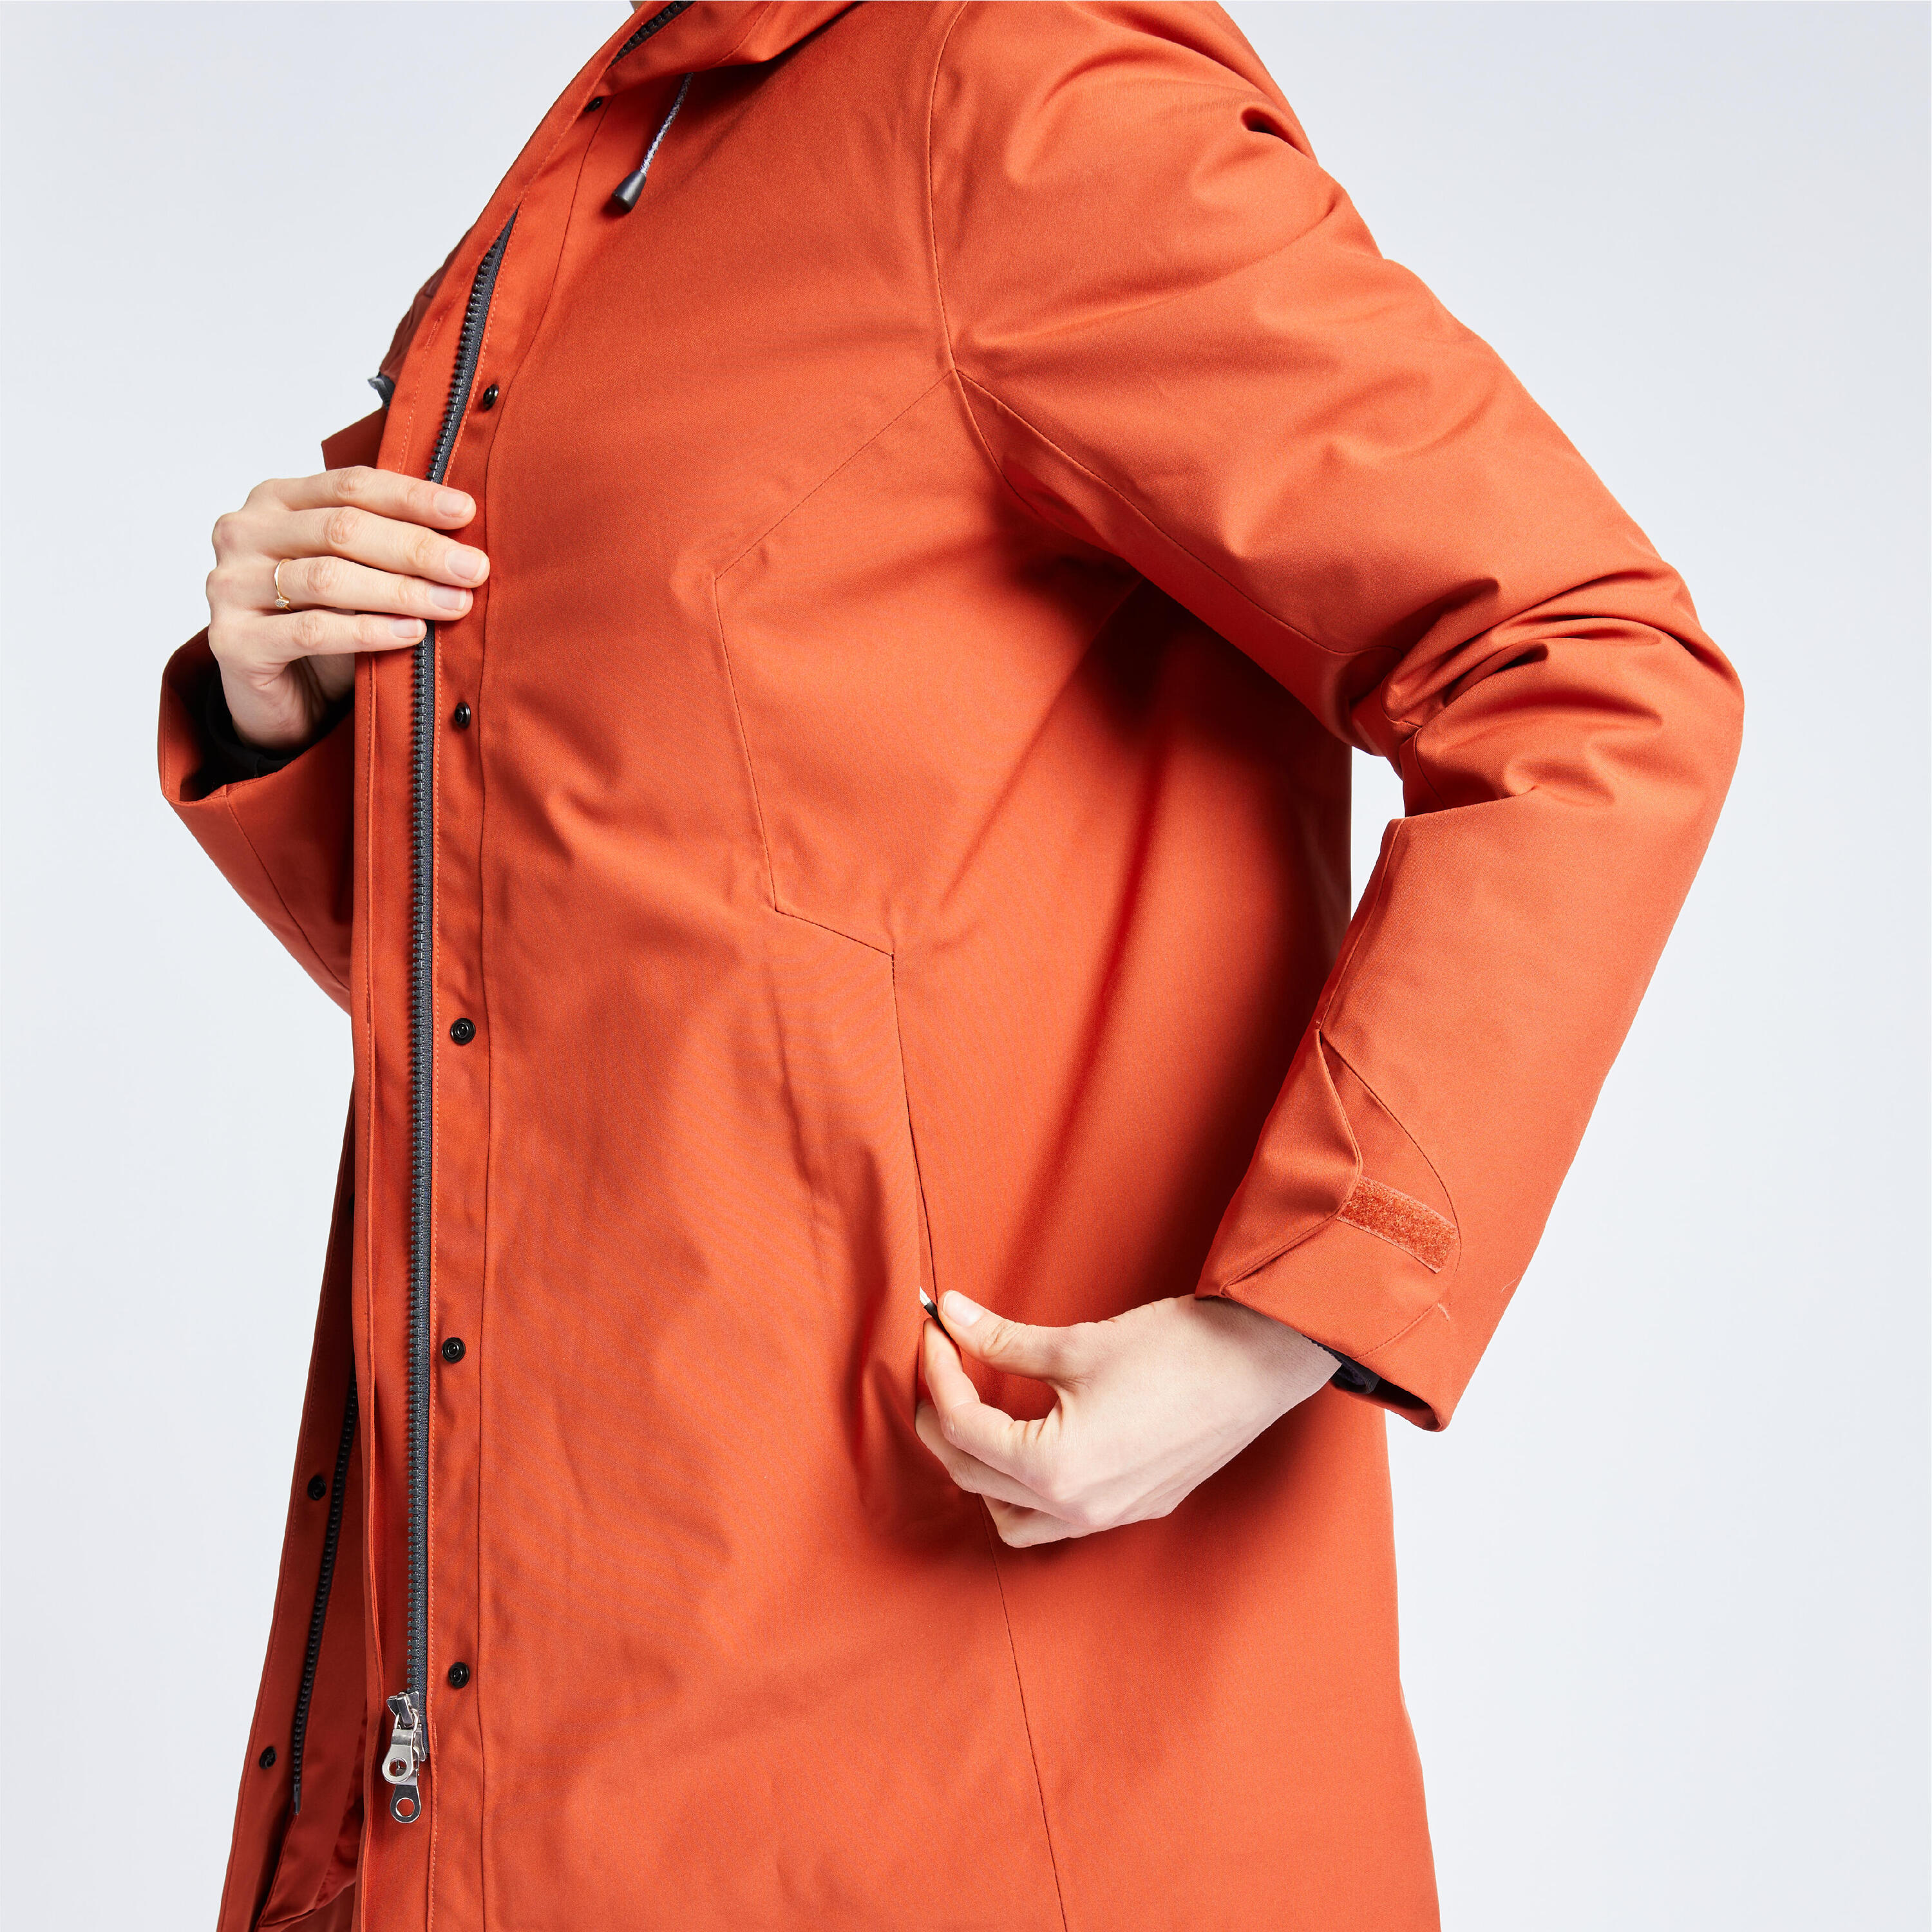 Women's warm waterproof windproof sailing jacket - SAILING 300 Dark orange 5/11